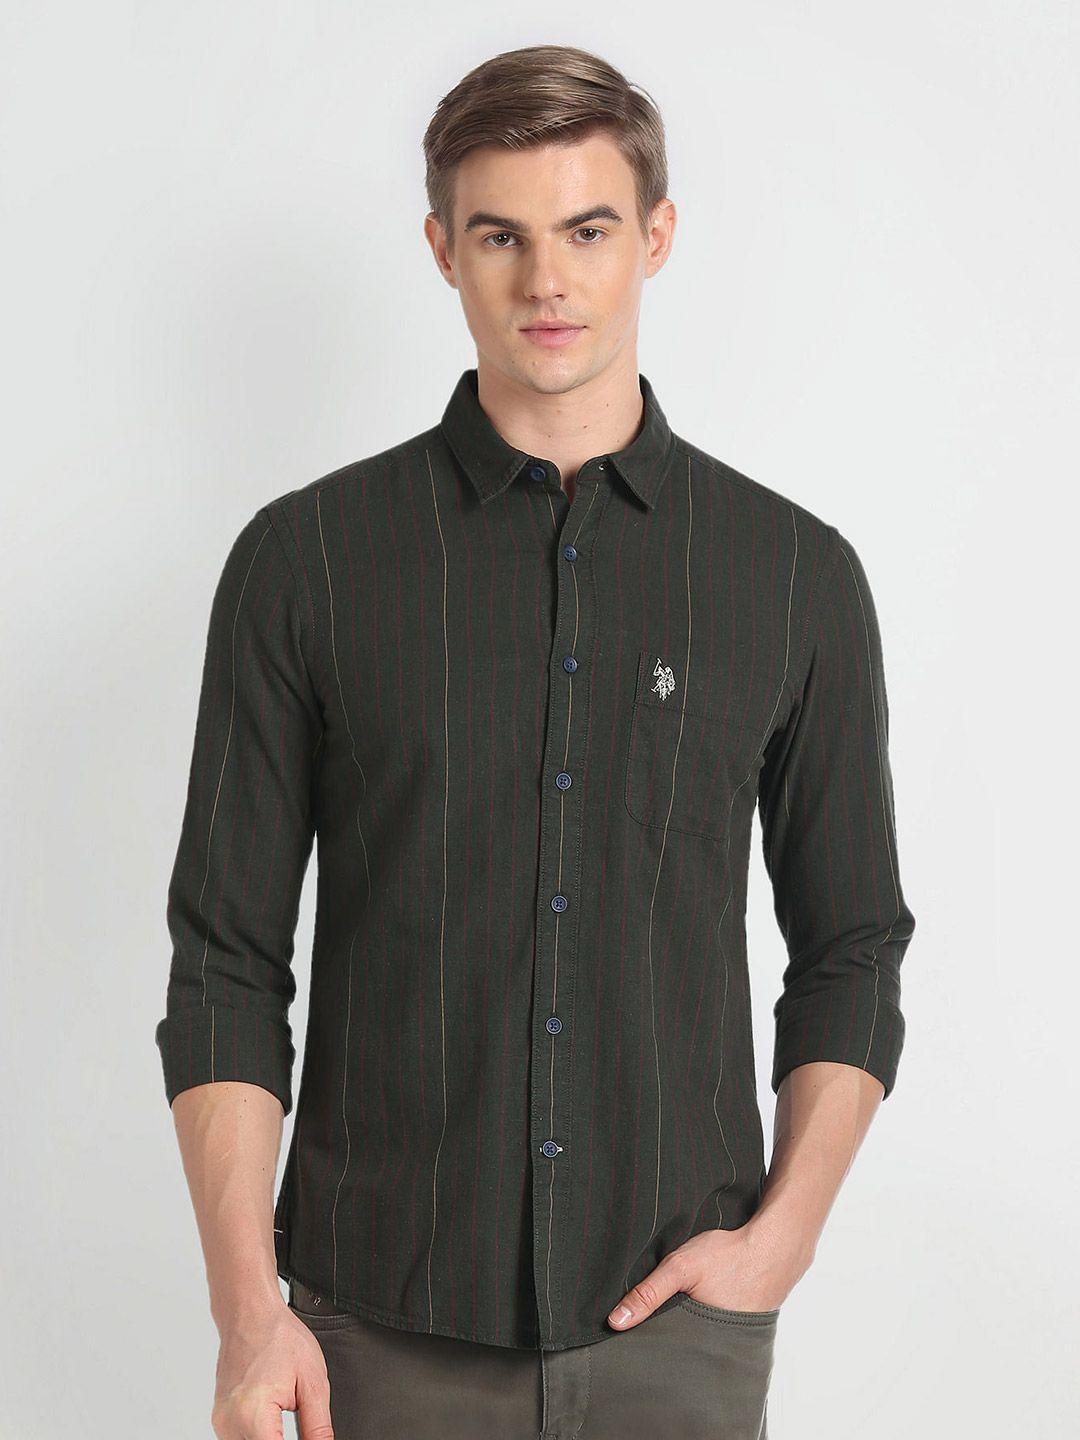 u.s. polo assn. denim co. slim fit vertical striped casual shirt